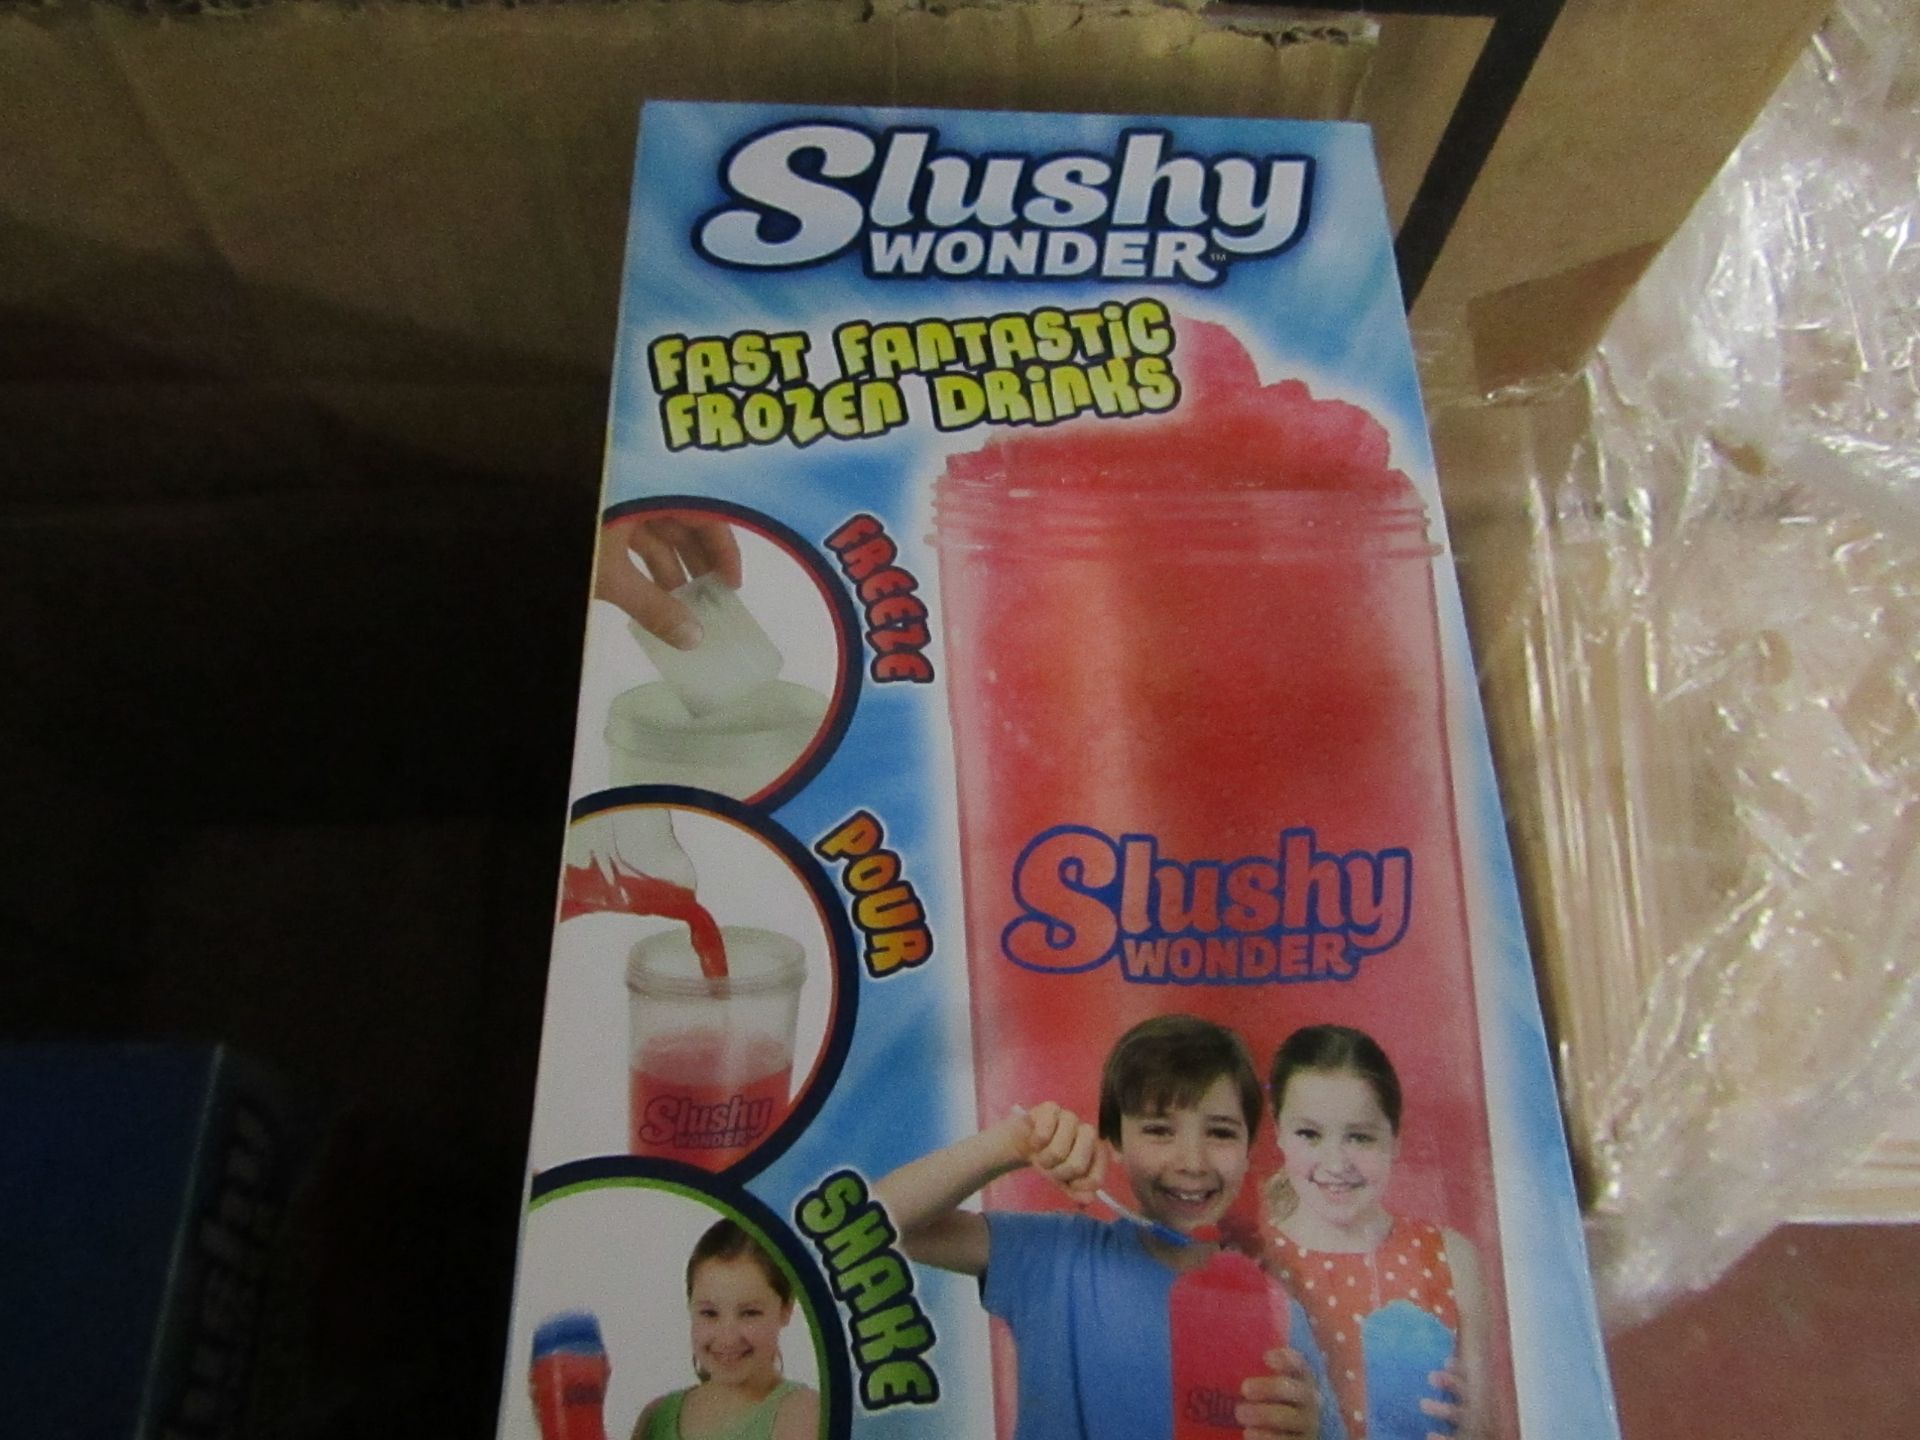 6 x Slushy Wonder Frozen Drinks Makers. New & boxed